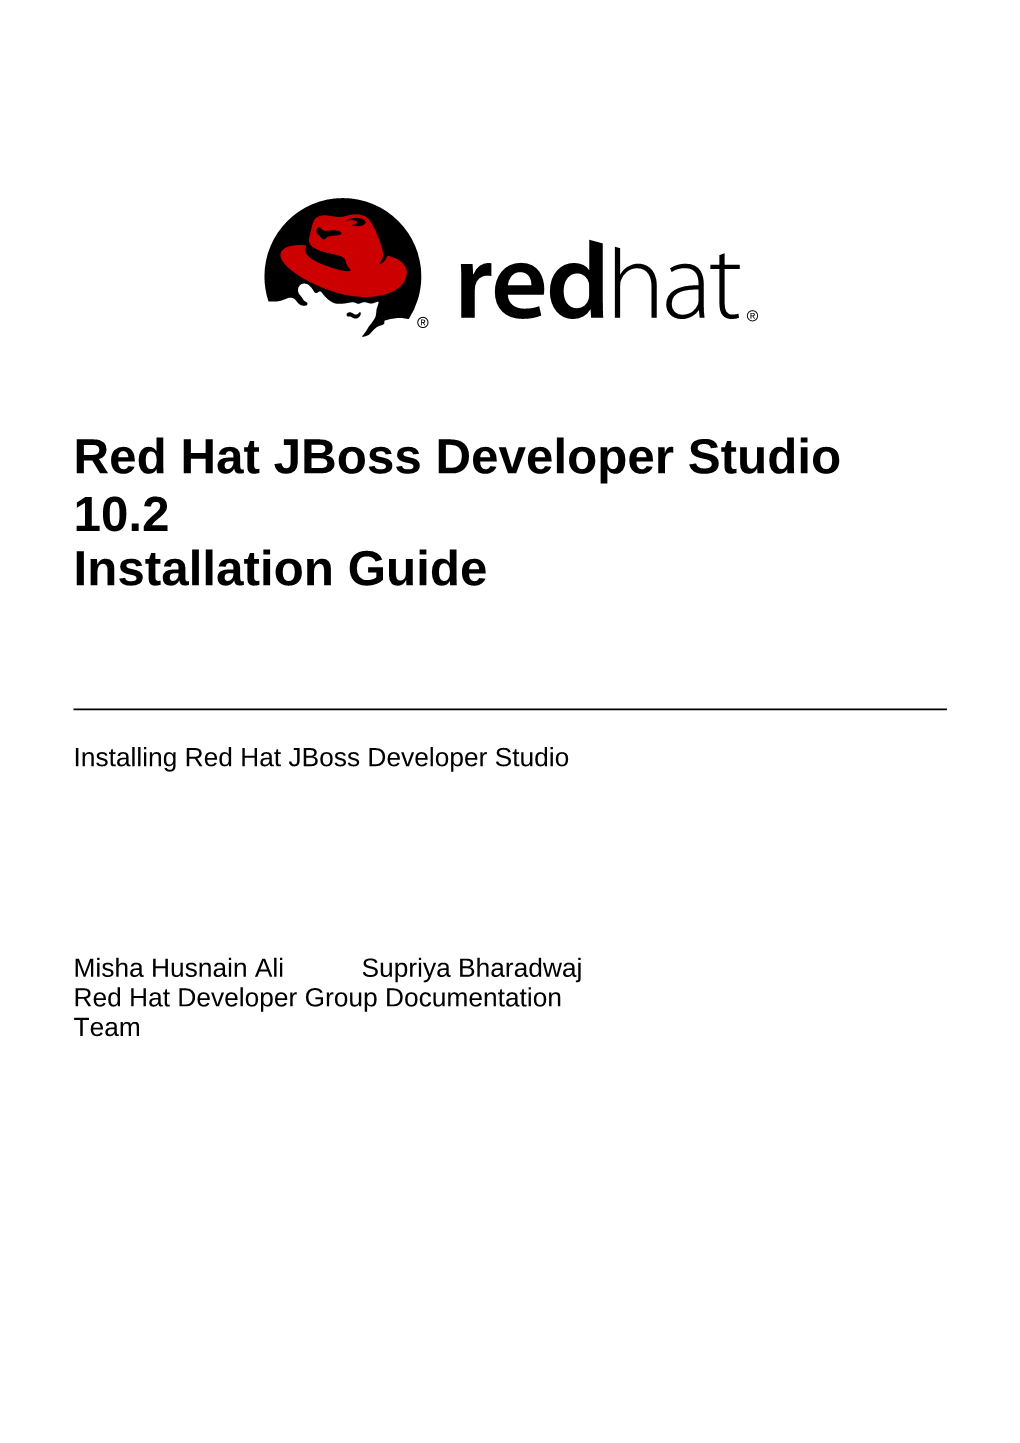 Red Hat Jboss Developer Studio 10.2 Installation Guide